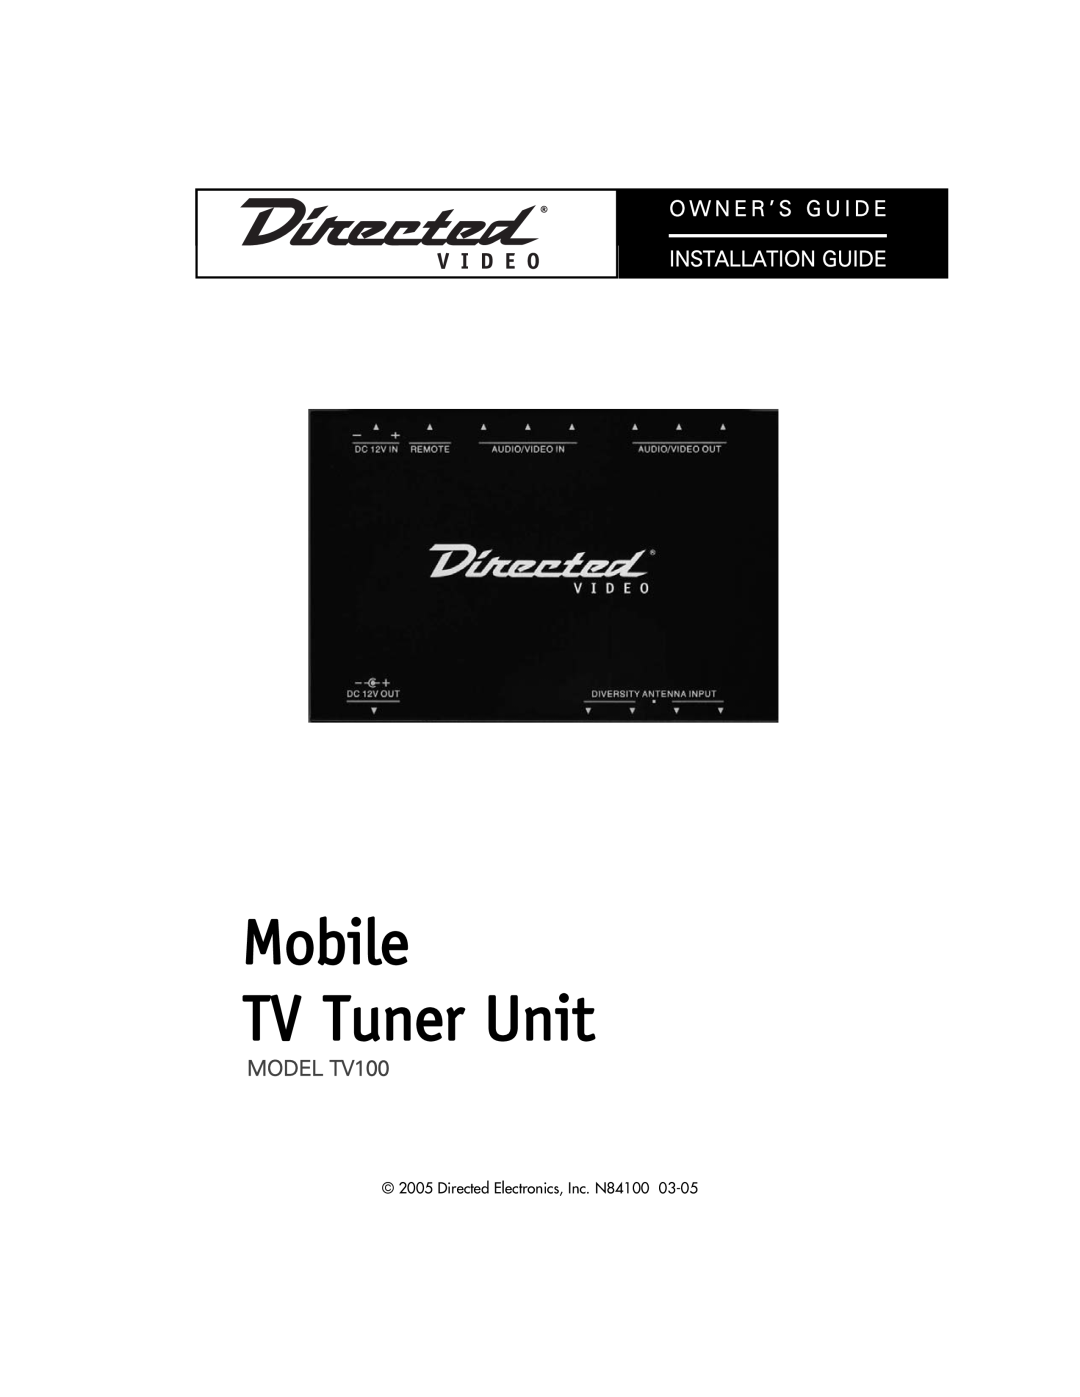 Directed Video manual MODEL TV100, Mobile TV Tuner Unit, O W N E R ’ S G U I D E Installation Guide 